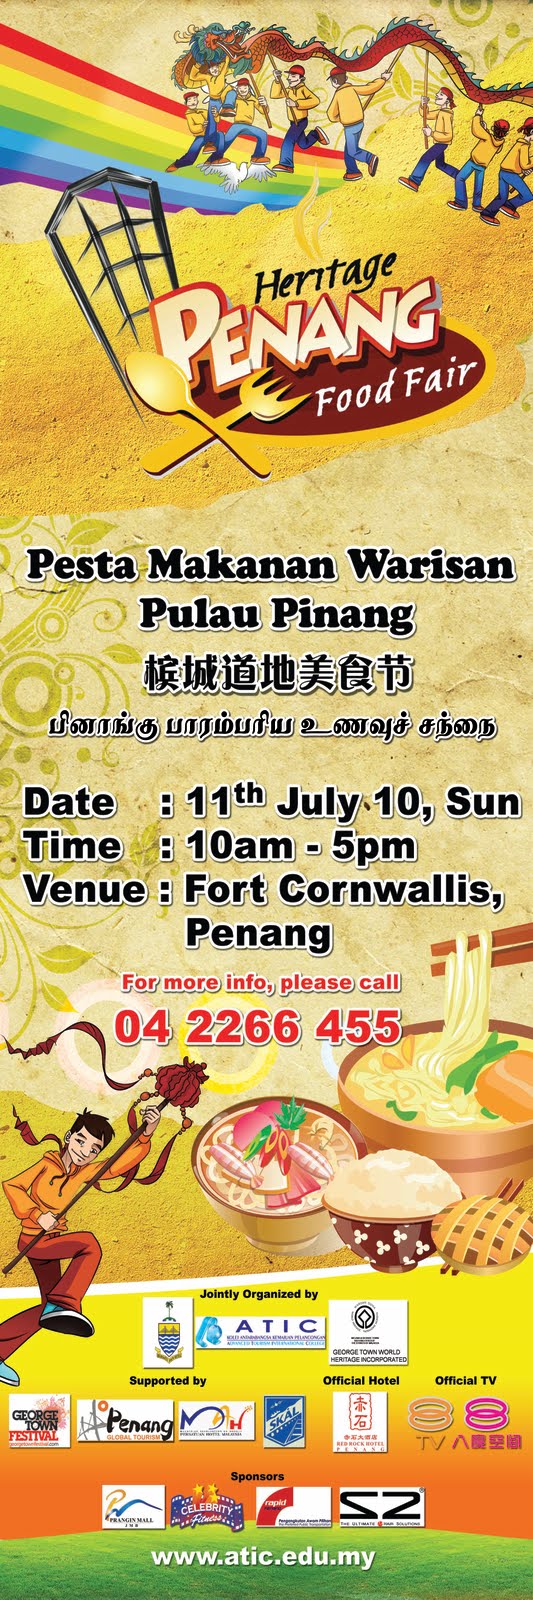 ADVANCED TOURISM INTERNATIONAL COLLEGE: Penang Heritage Food Fair